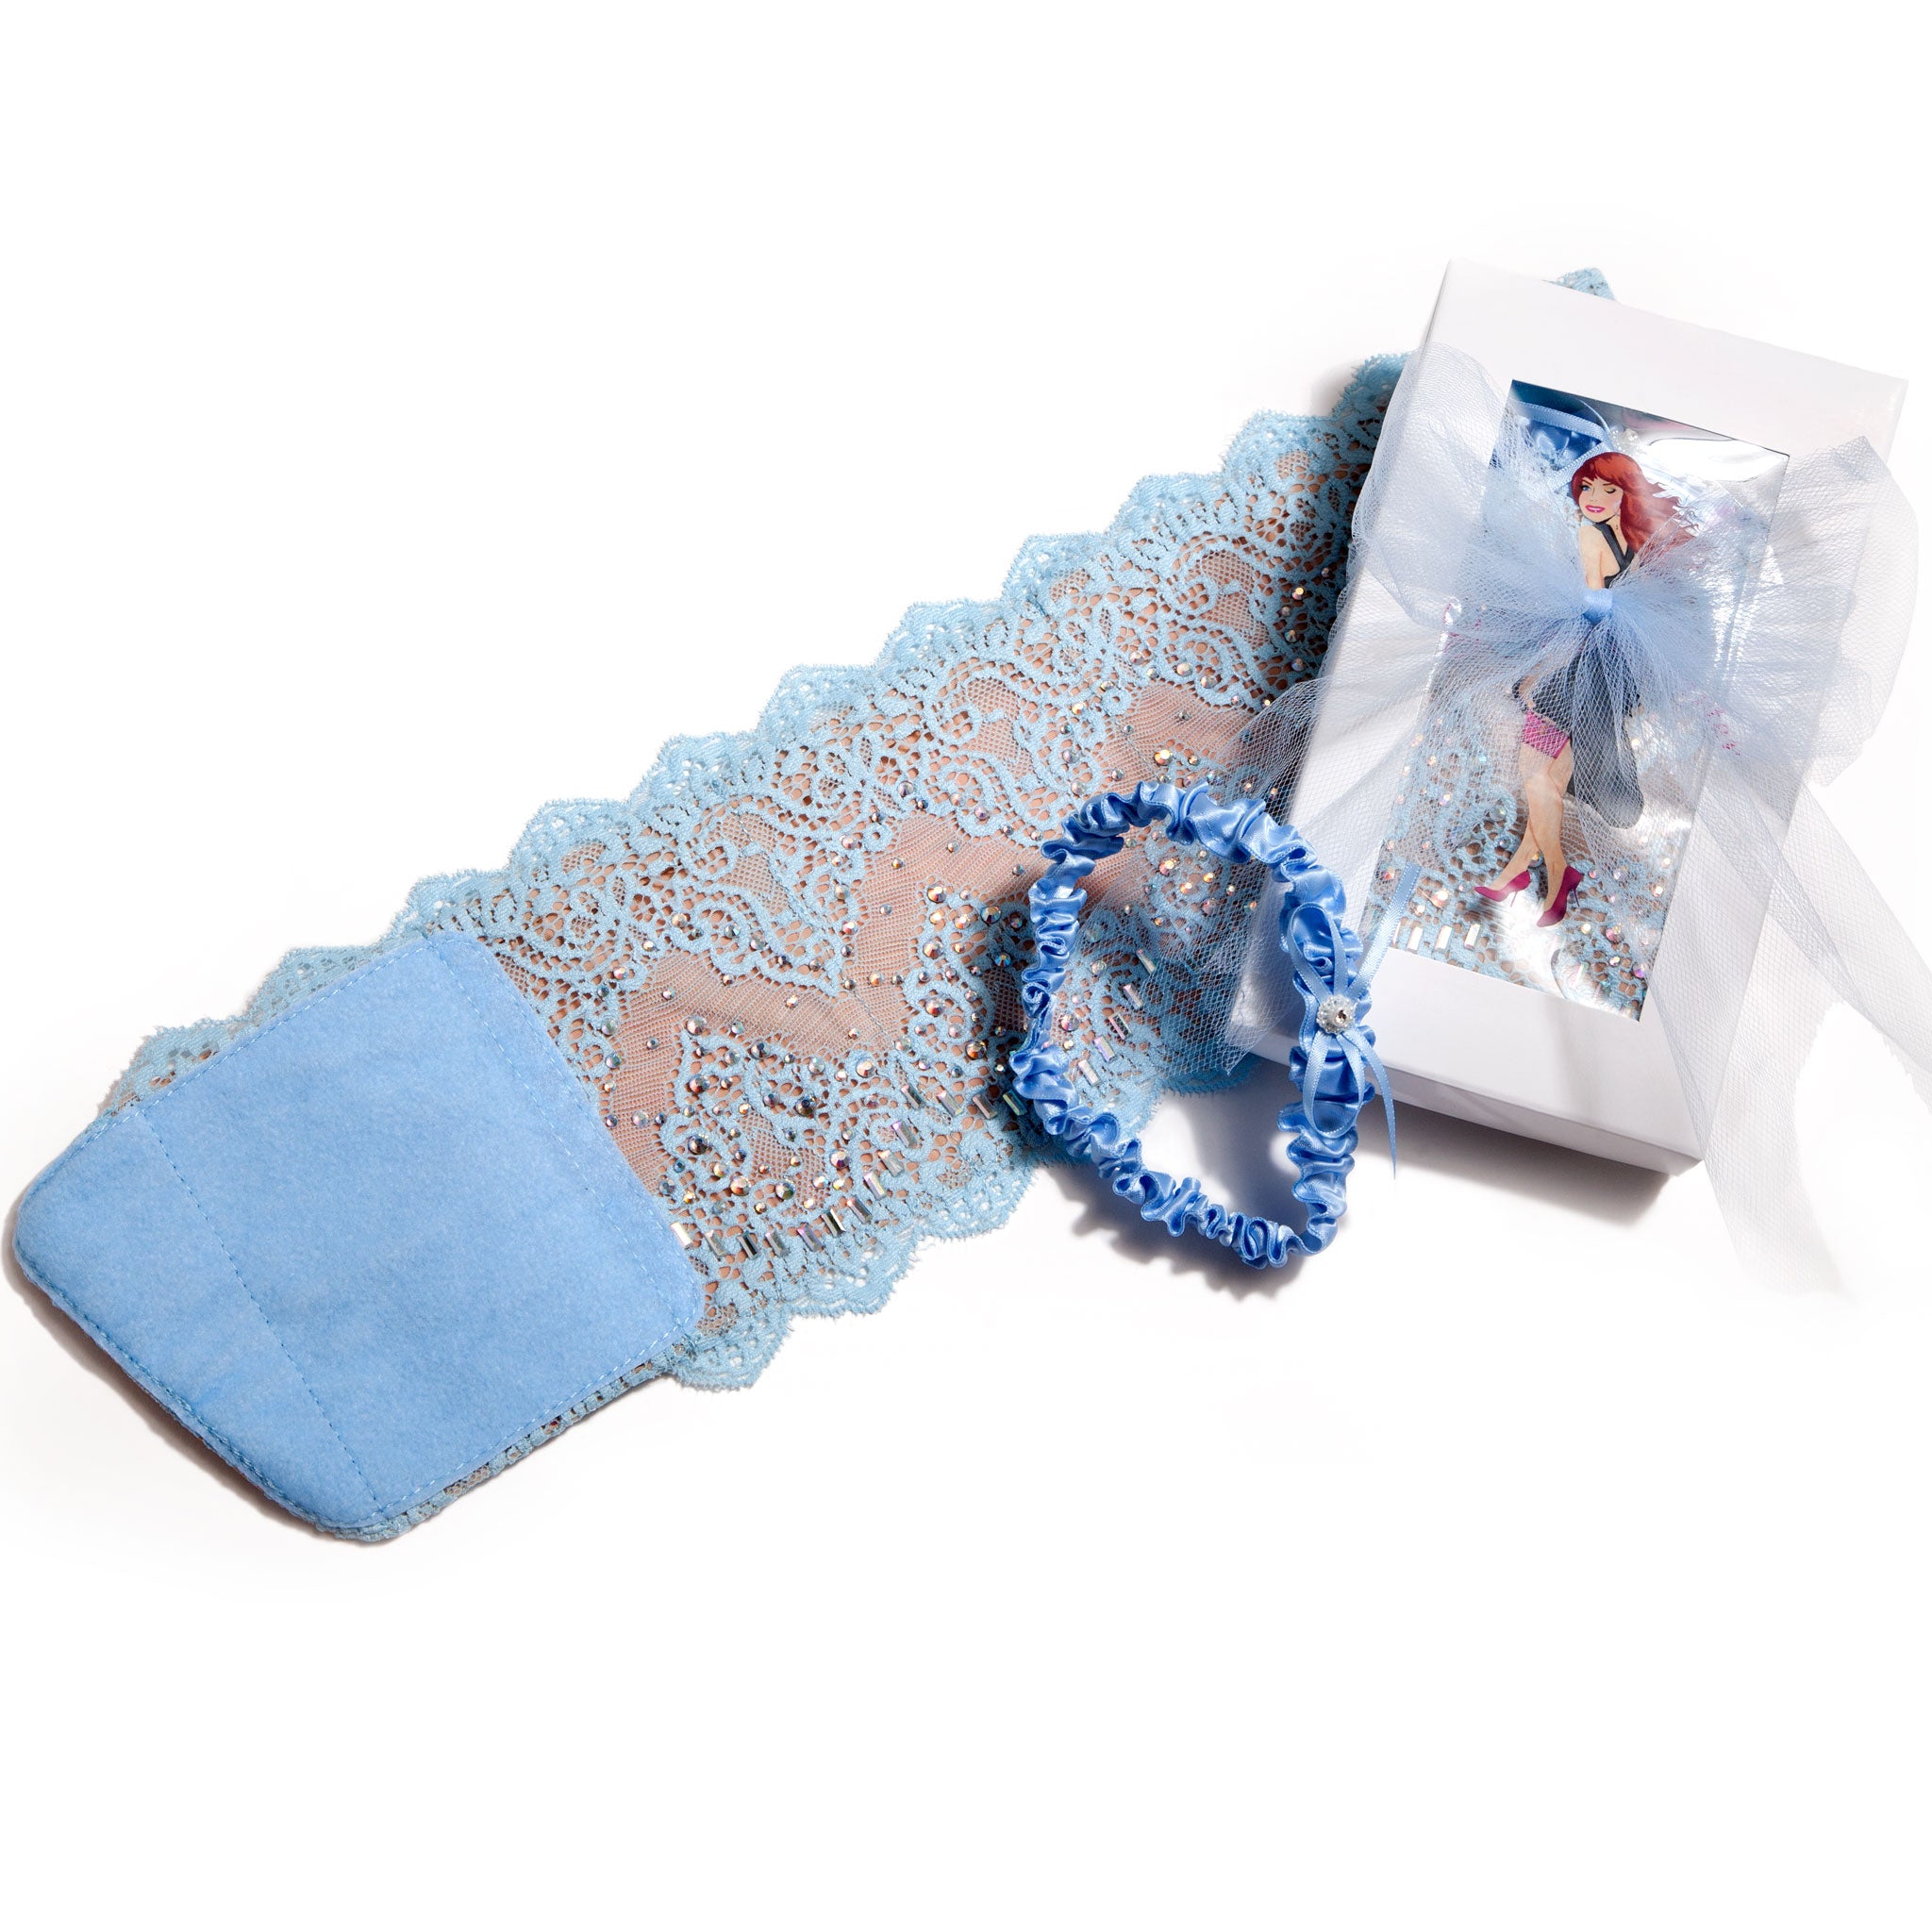 Blue Wedding Garter Bridal Garter Gift Set with free satin garter for wedding garter toss GlitzyGoGarter by Andy Paige